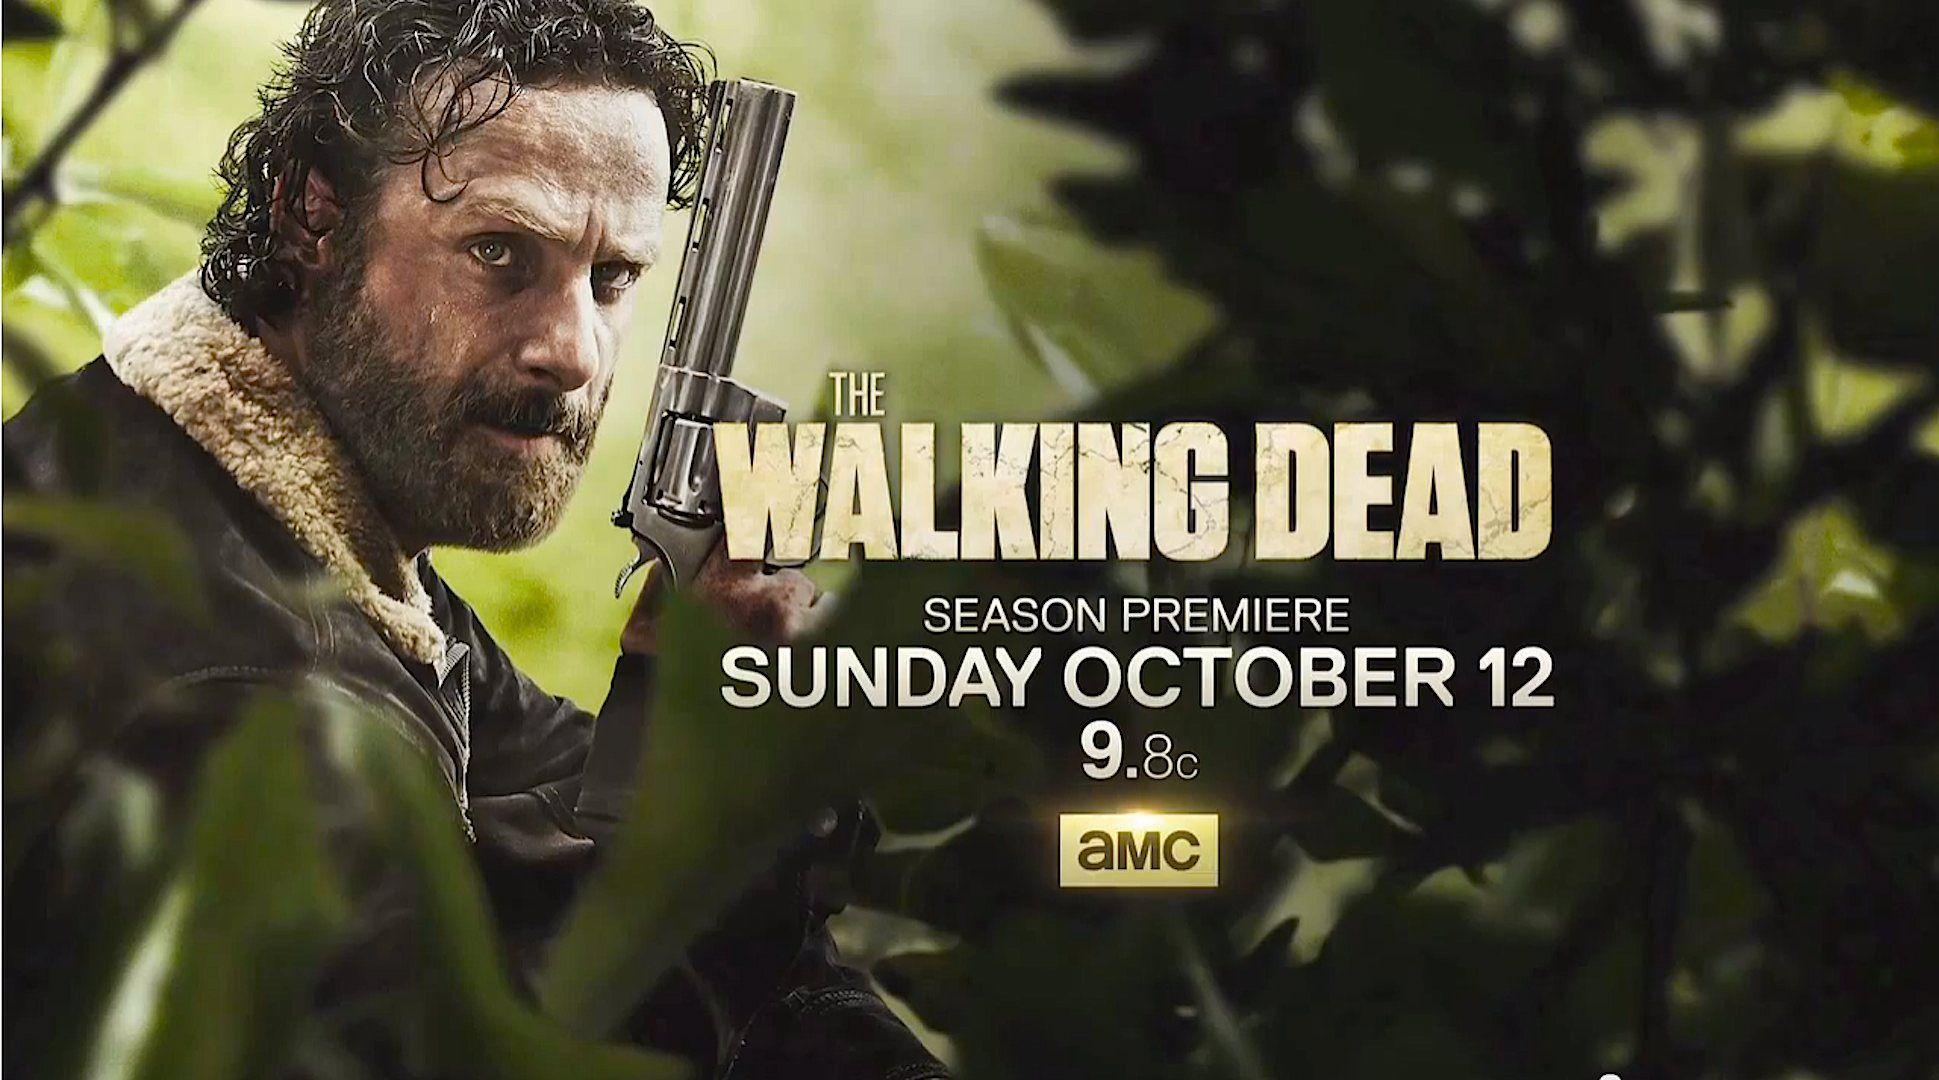 New for The Walking Dead Season 5 Premiere. Entertainment